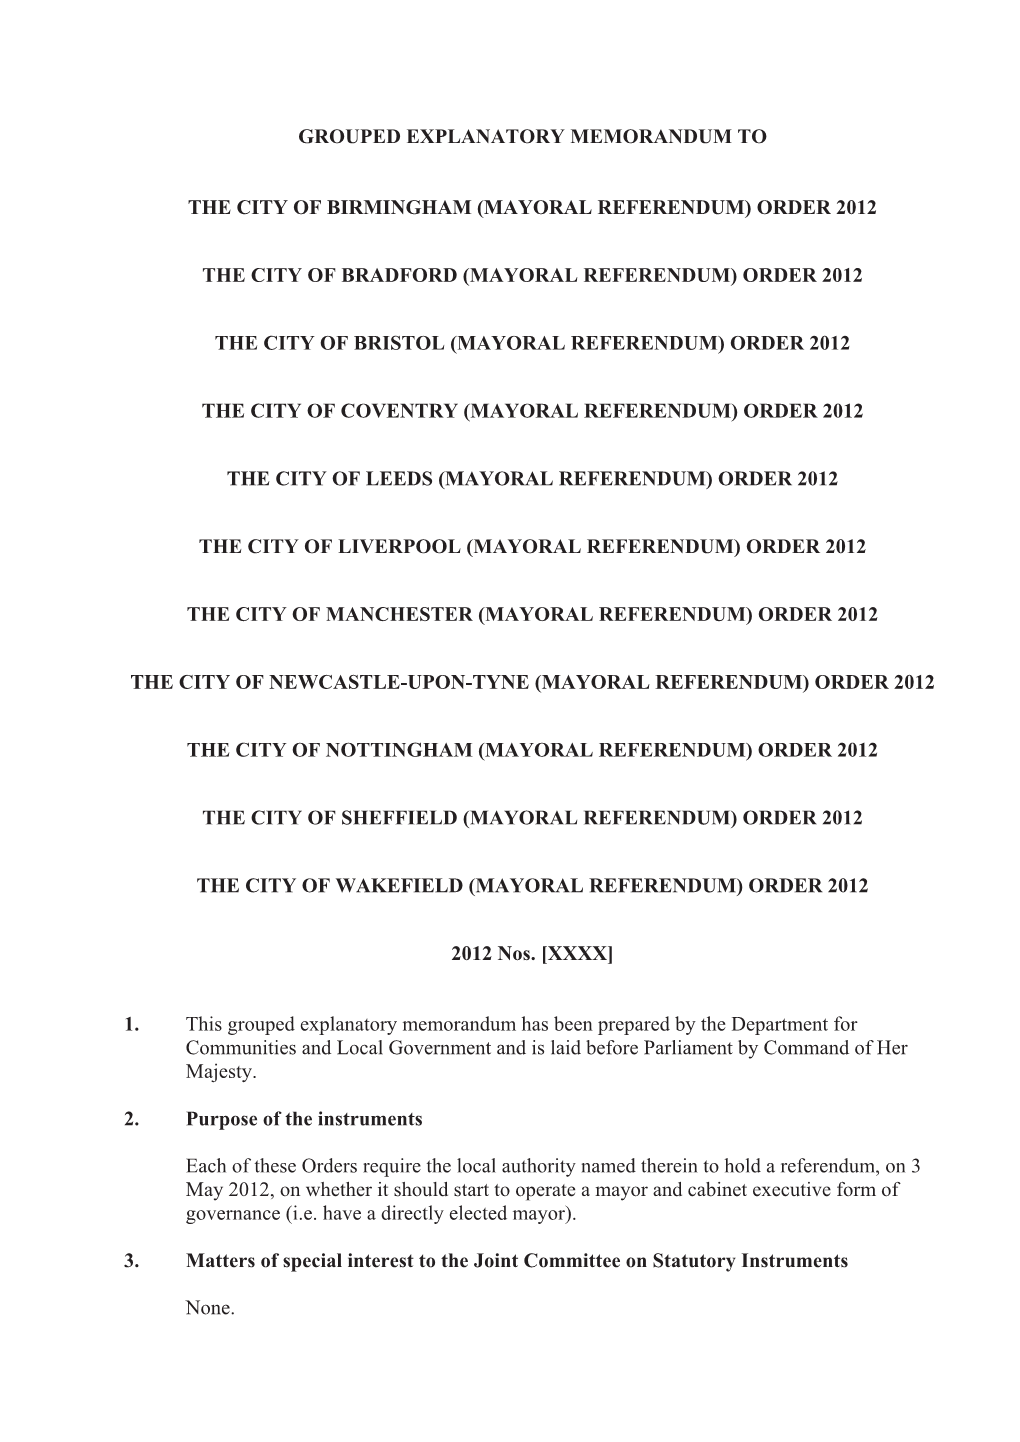 Explanatory Memorandum to the City of Leeds (Mayoral Referendum) Order 2012